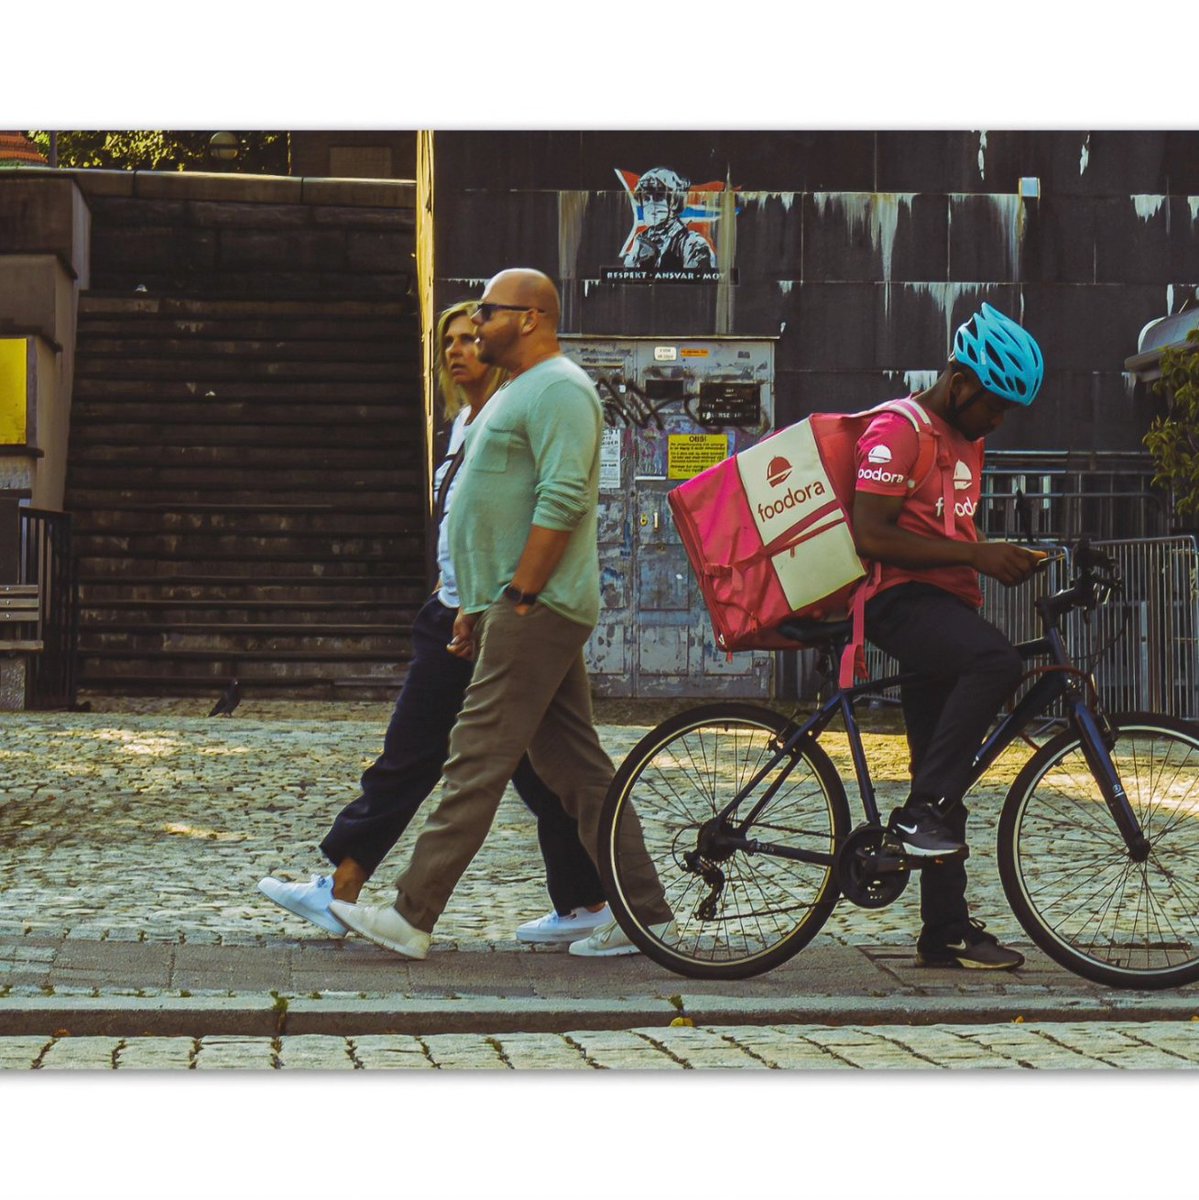 #Transportation #People #Bicycle #city #candidstreet #streetshooter #streetphoto #bergen #norway #thephotowalkpodcast #shapingthelightwithgreg #diginordic #photopluscanonmagazine #photographymasterclassmagazine #canon_photographer #picoftheday